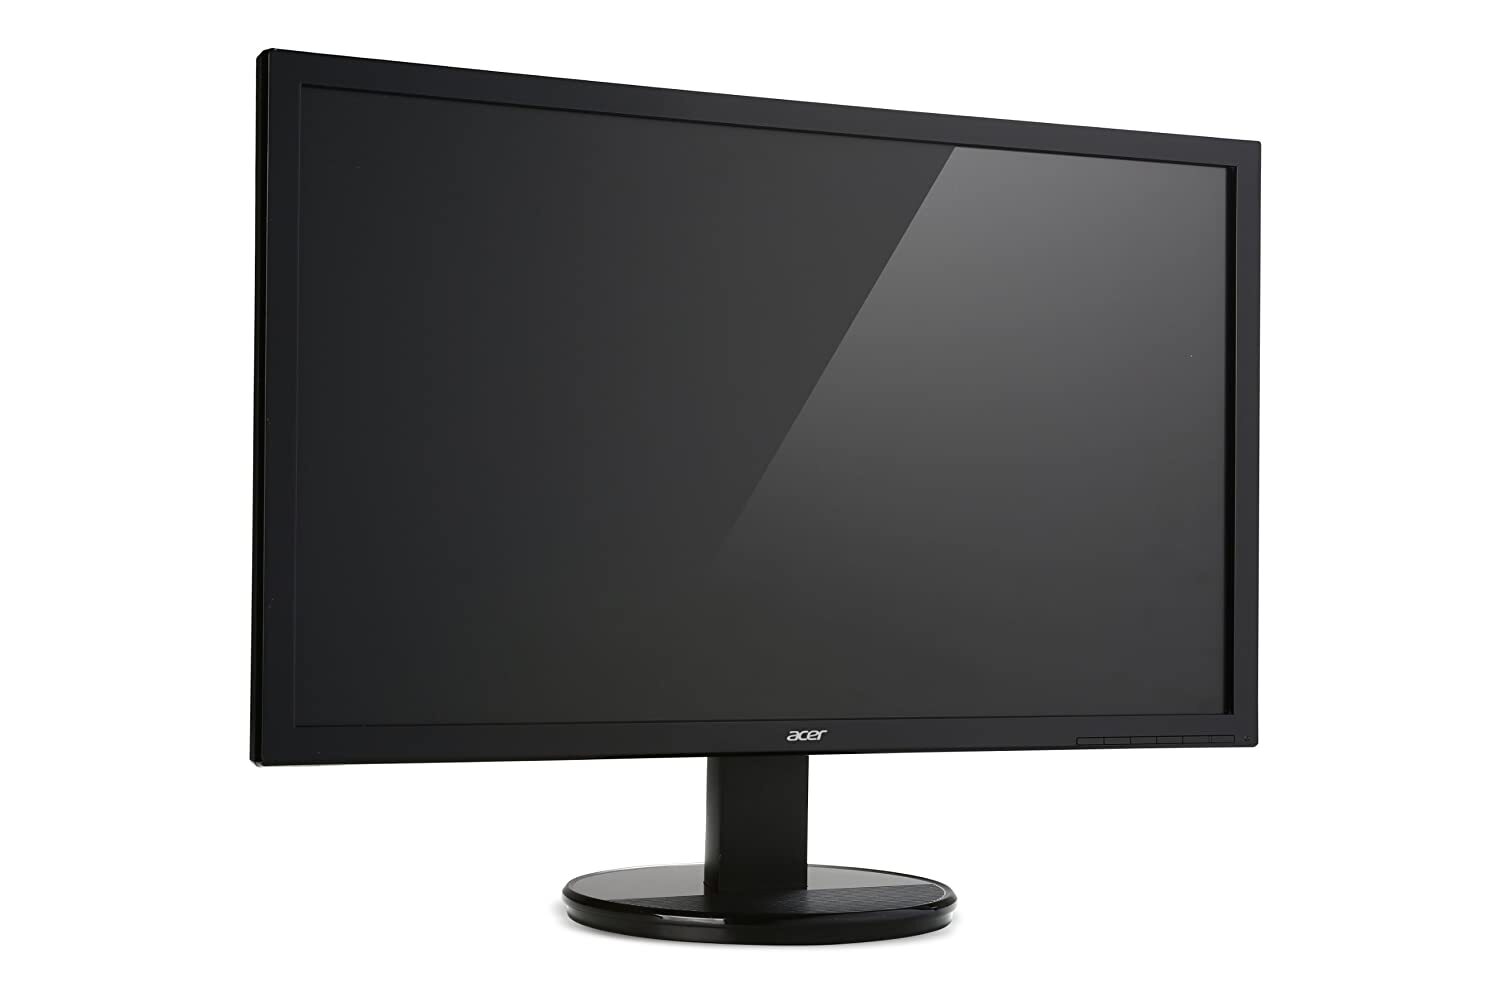 ACER 19.5-inch (49.53 cm) LED Backlit Computer Monitor with VGA Ports - K202HQL (Black)